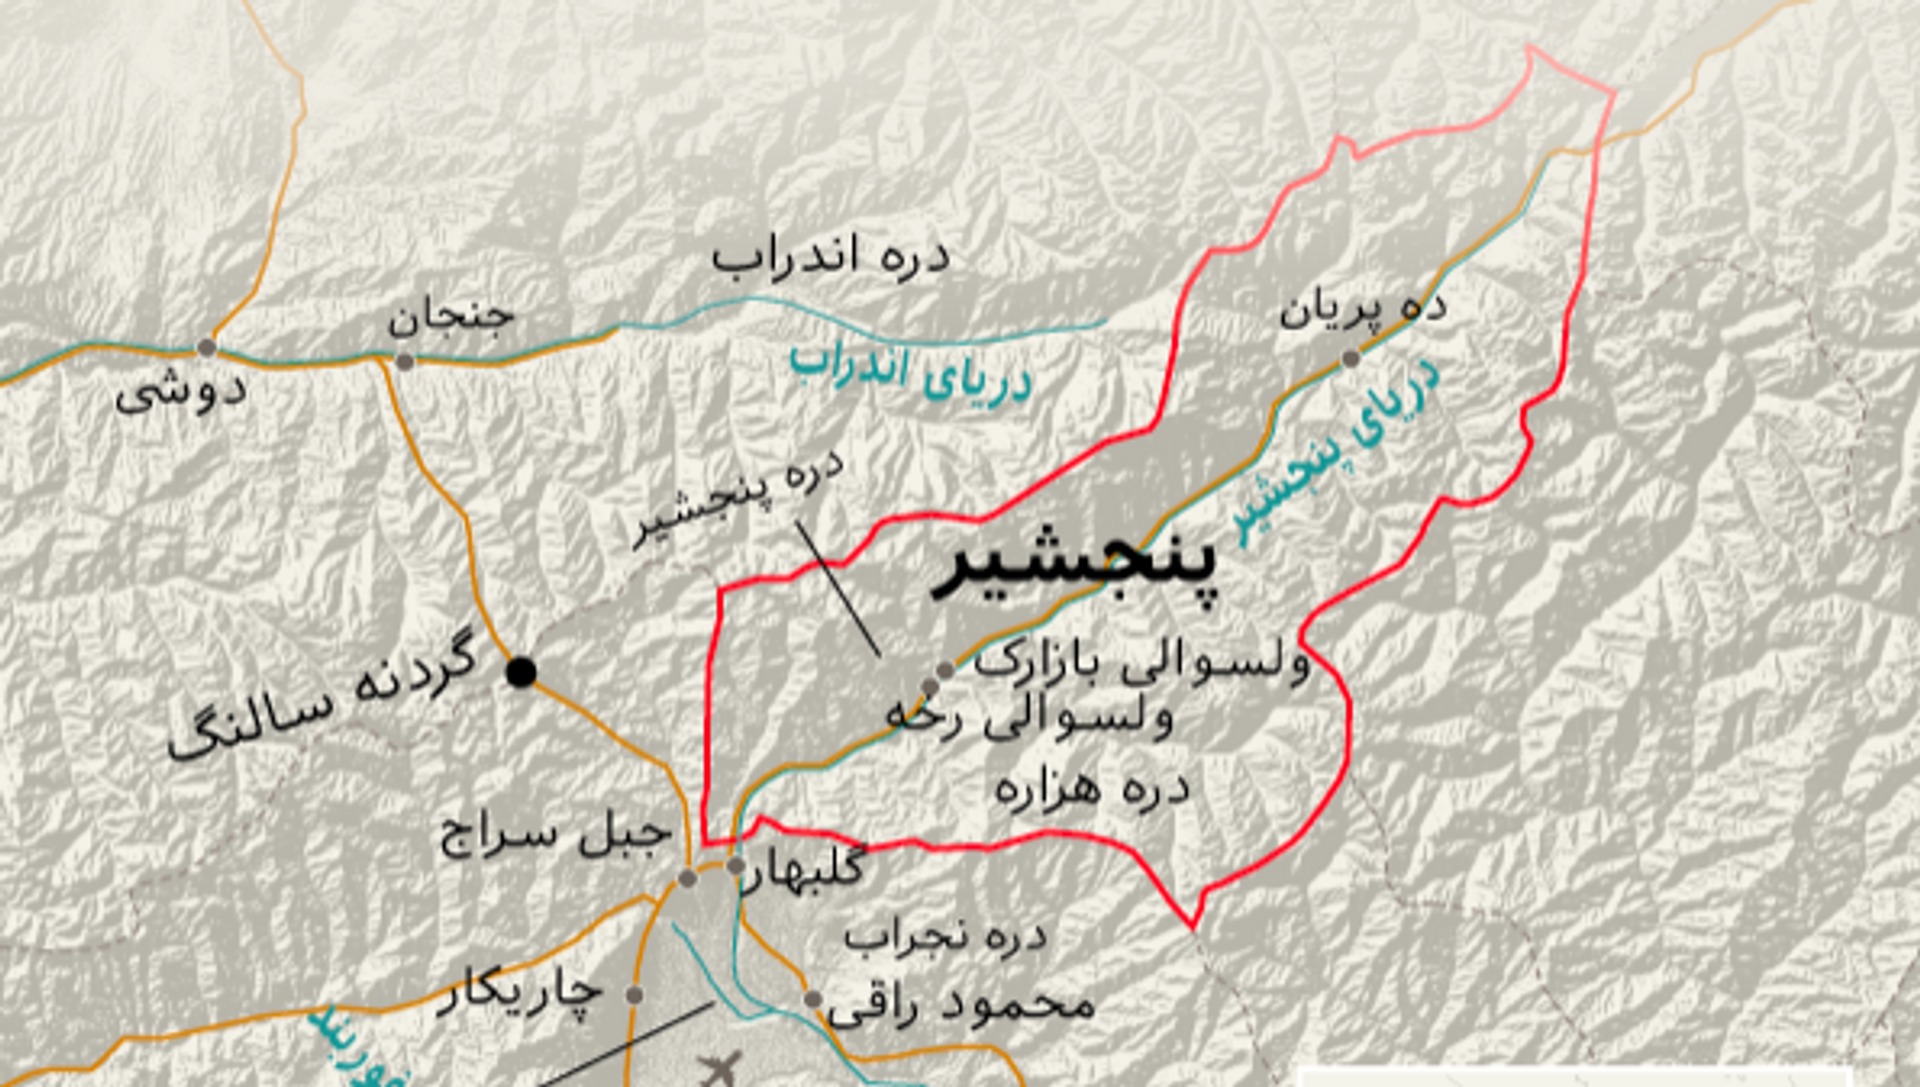 Map of the beseiged holdout province of Panjshir, Afghanistan. - Sputnik International, 1920, 03.09.2021